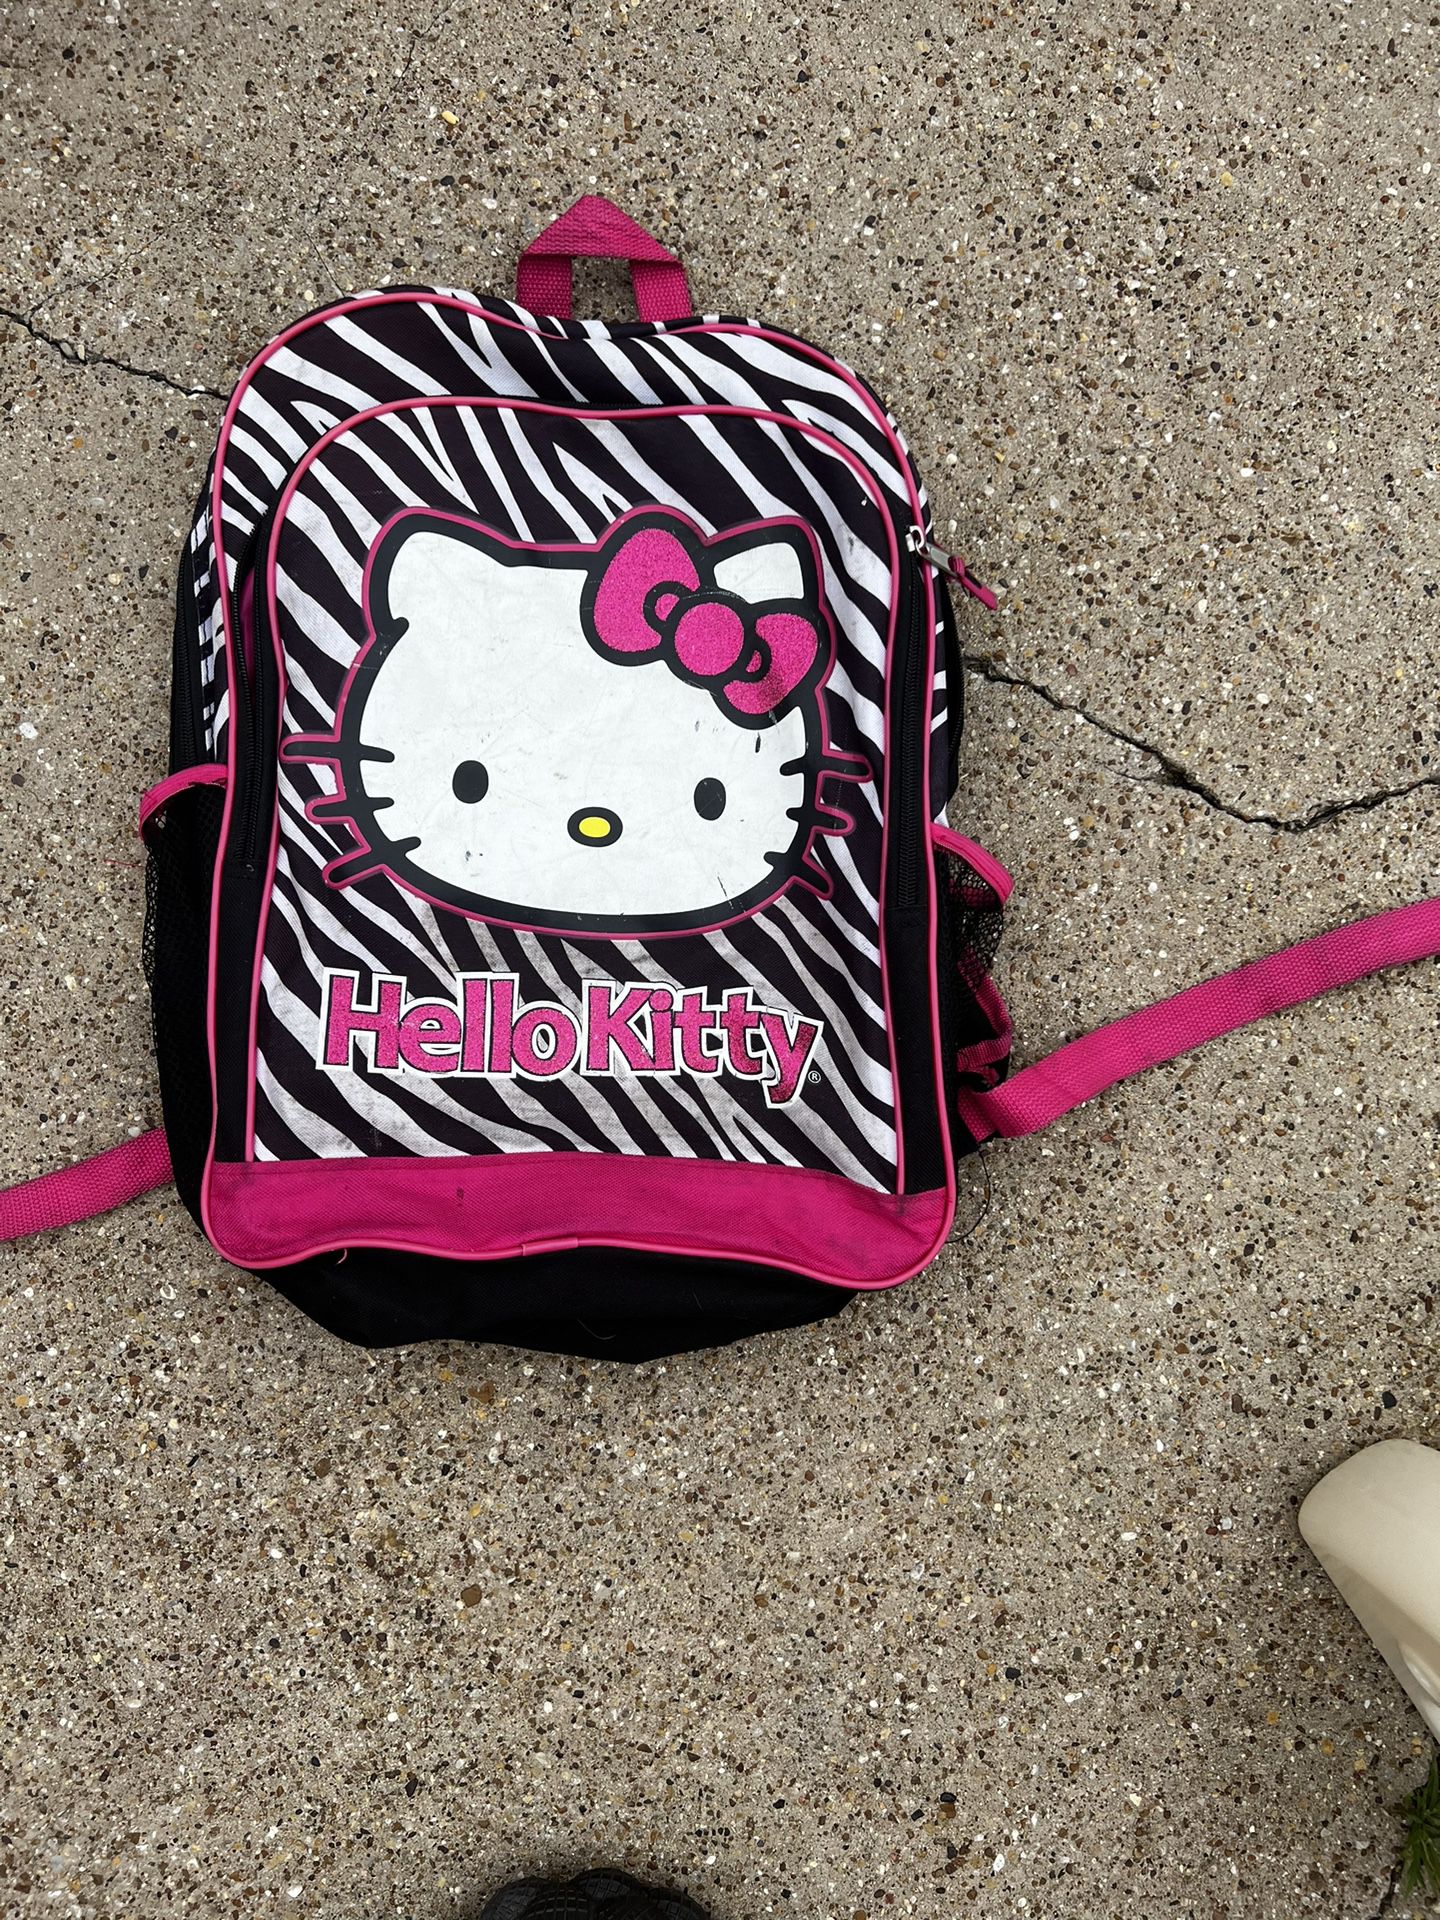 Hello kitty backpack